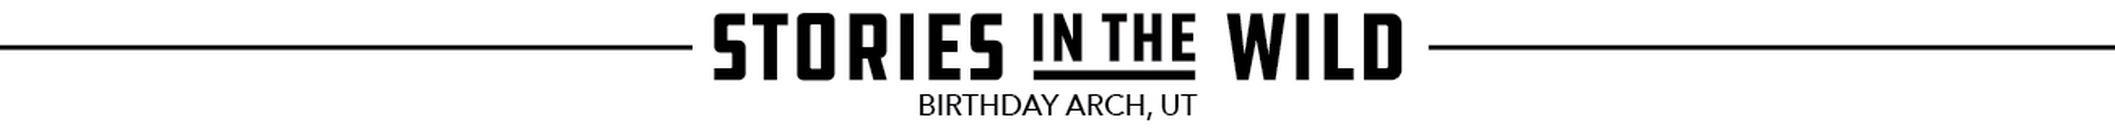 Stories in the Wild: Birthday Arch, UT